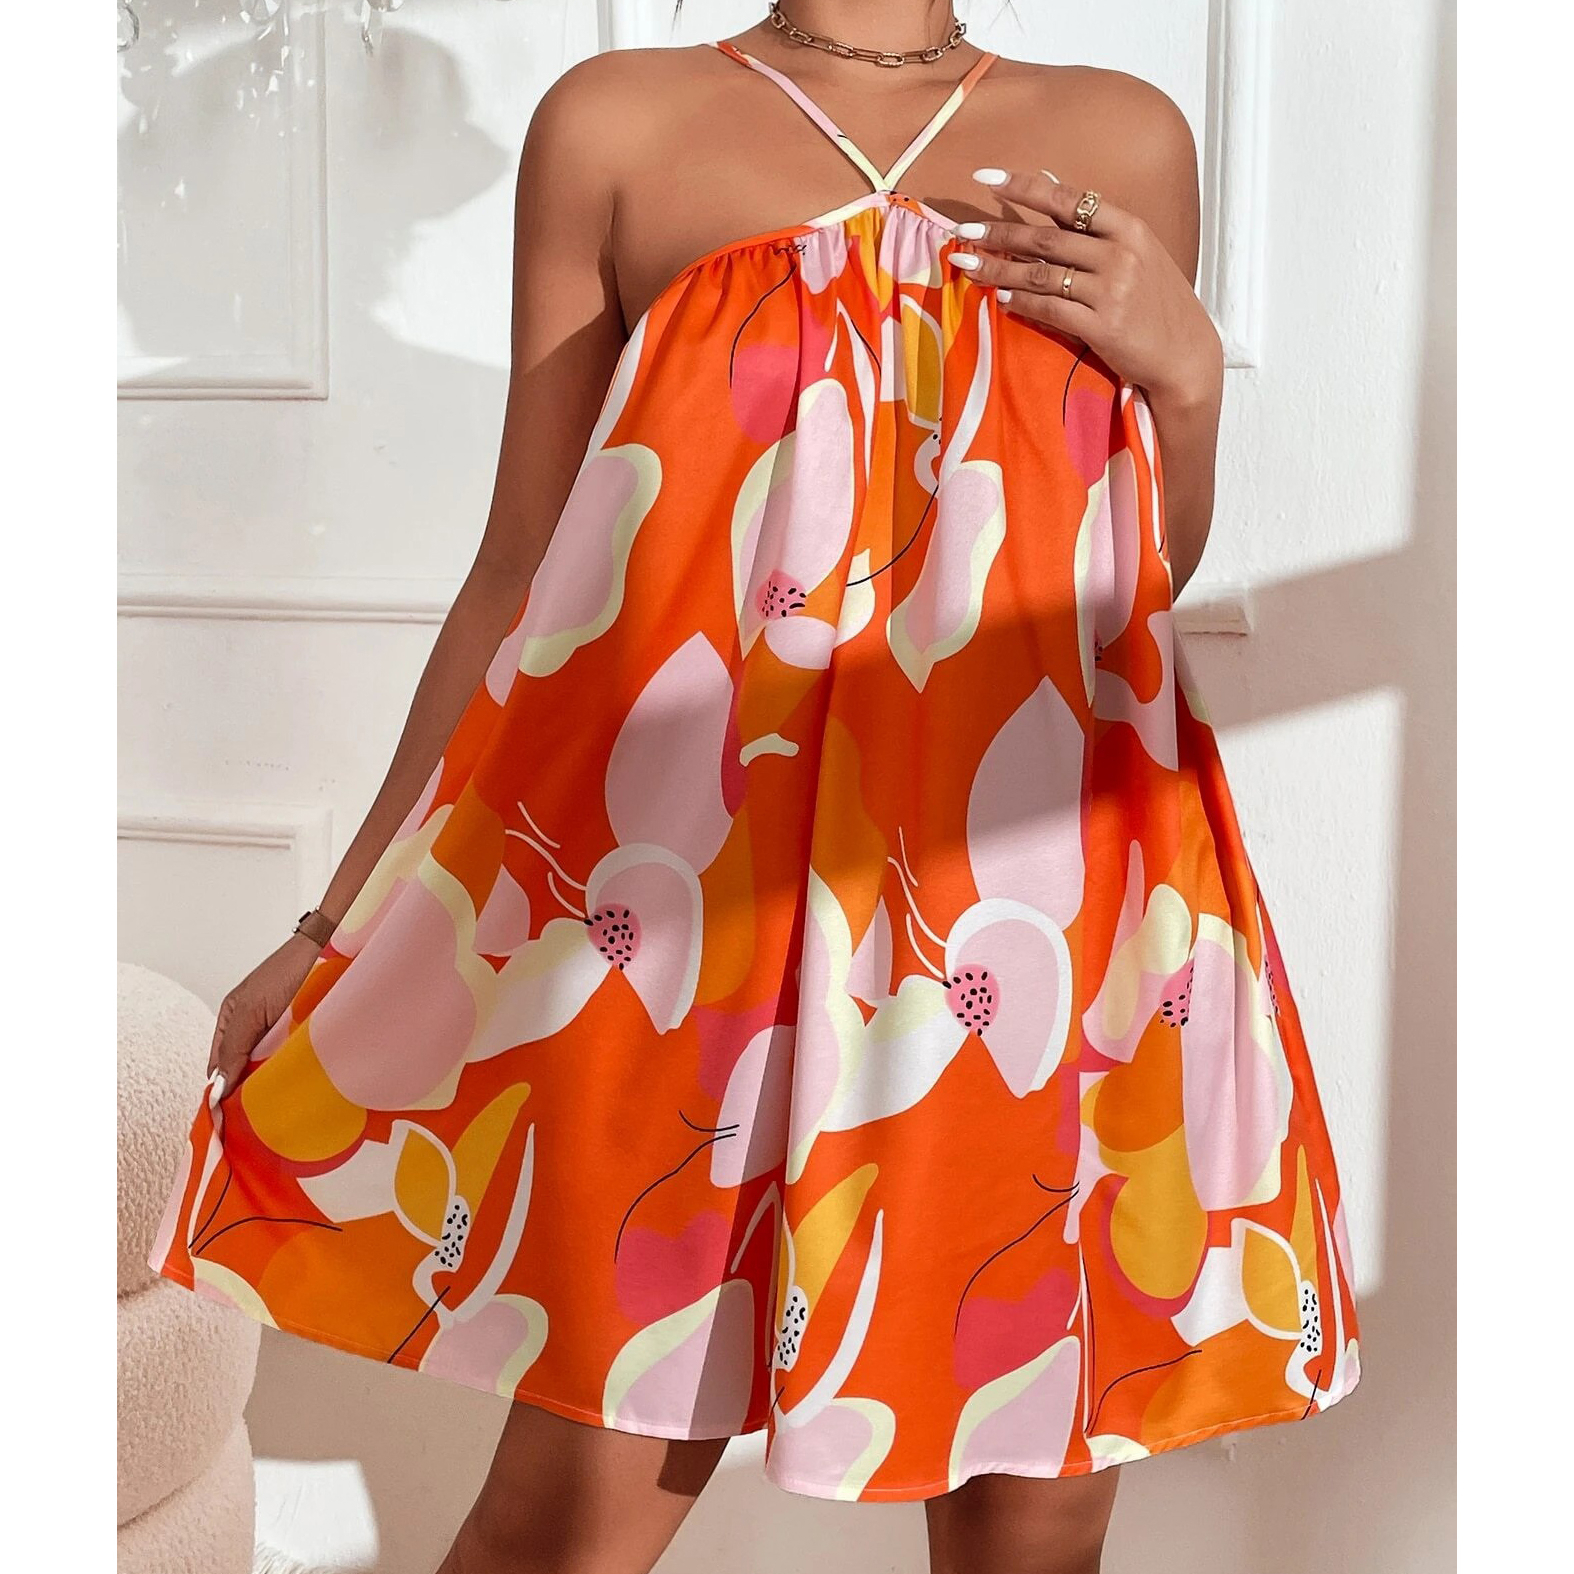 Allover Print Cami Dress - Hot Pink, Medium(6)